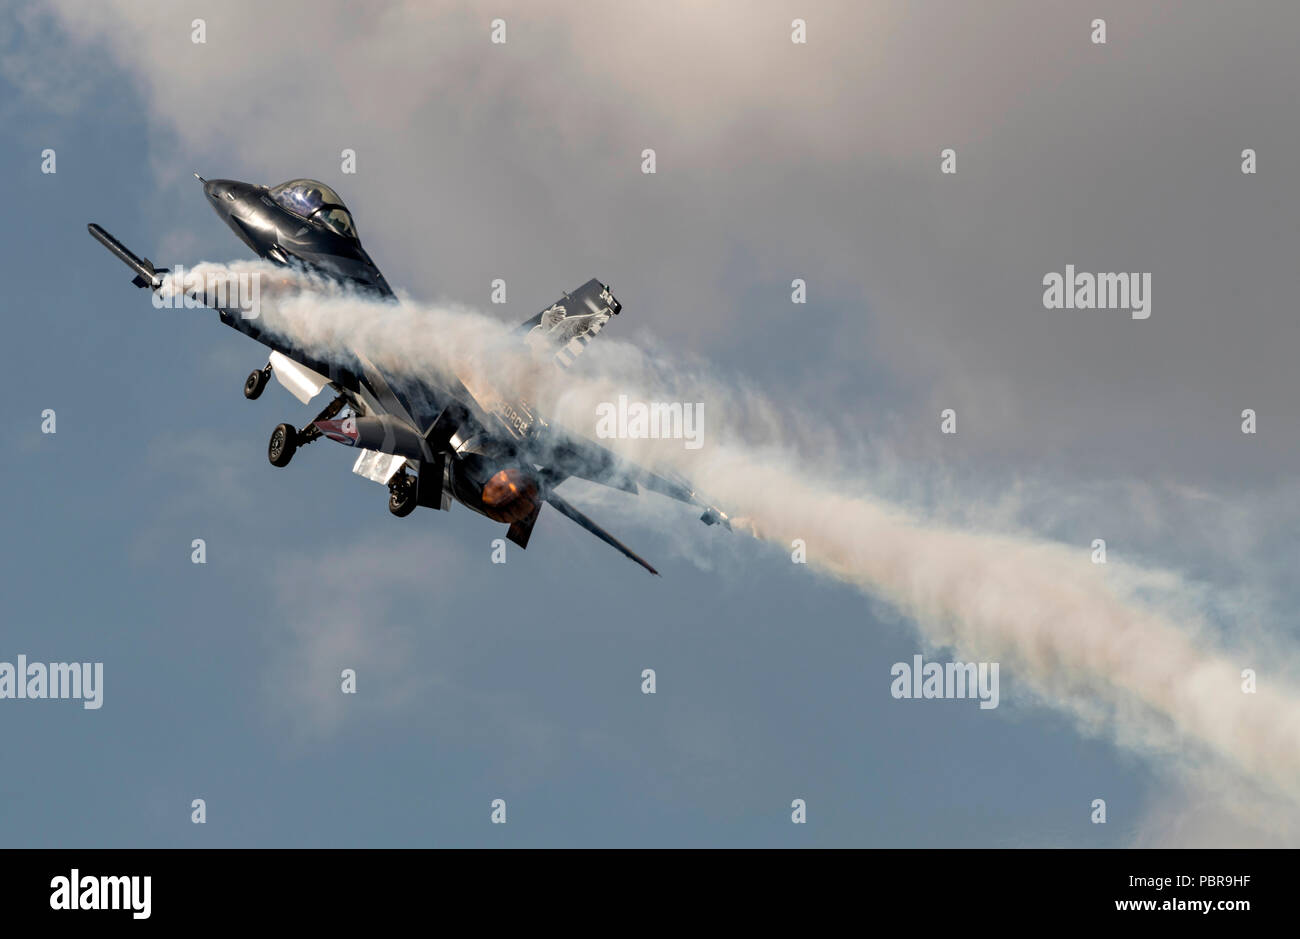 F-16A Fighting Falcon, 'Vador' buio Falcon, 2 PARAFANGO, belga componente dell'aria, Foto Stock